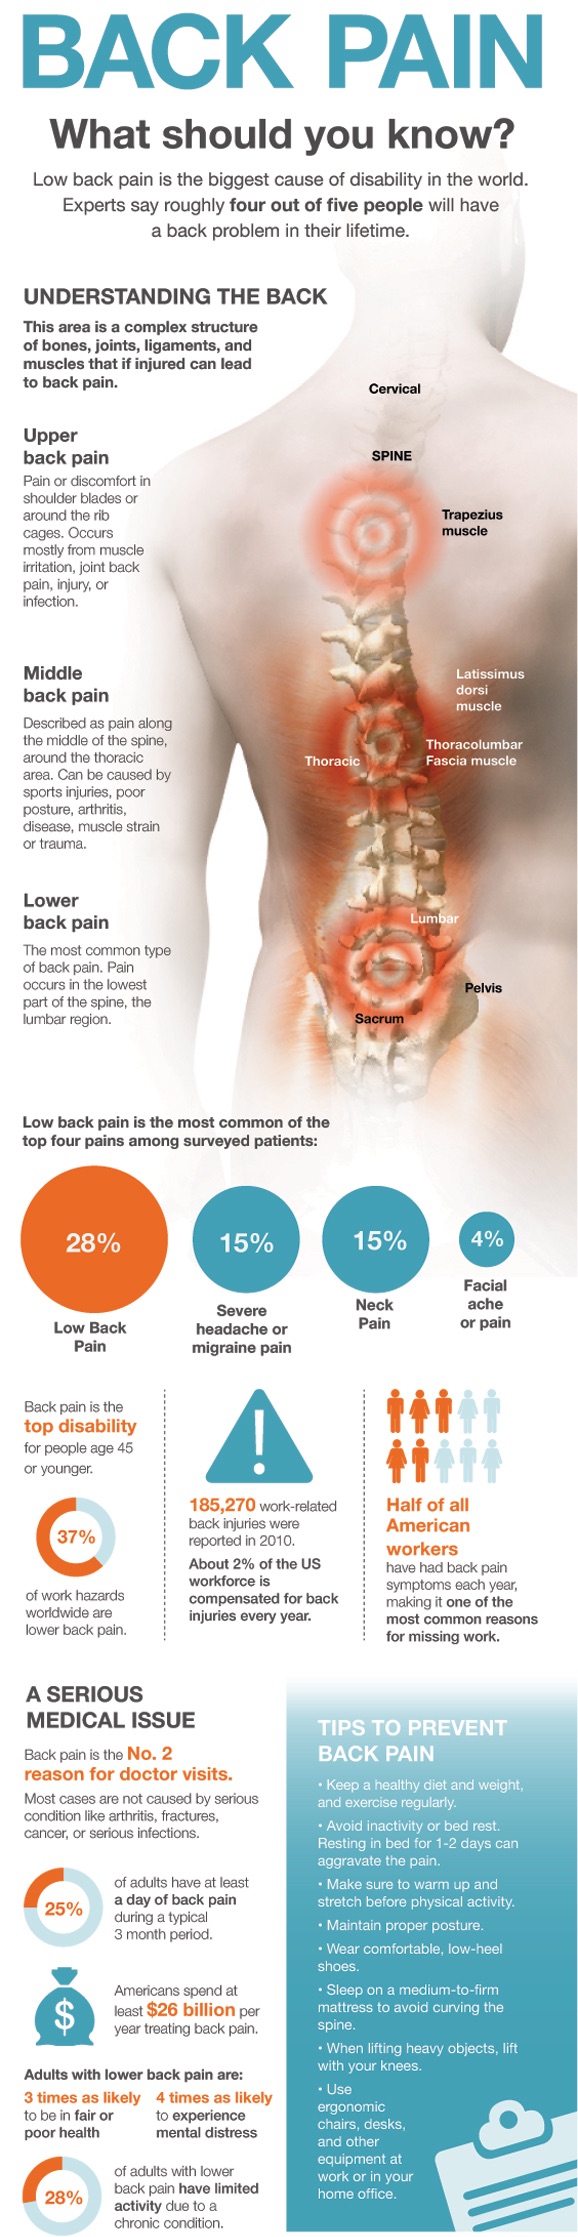 back pain treatment graphic